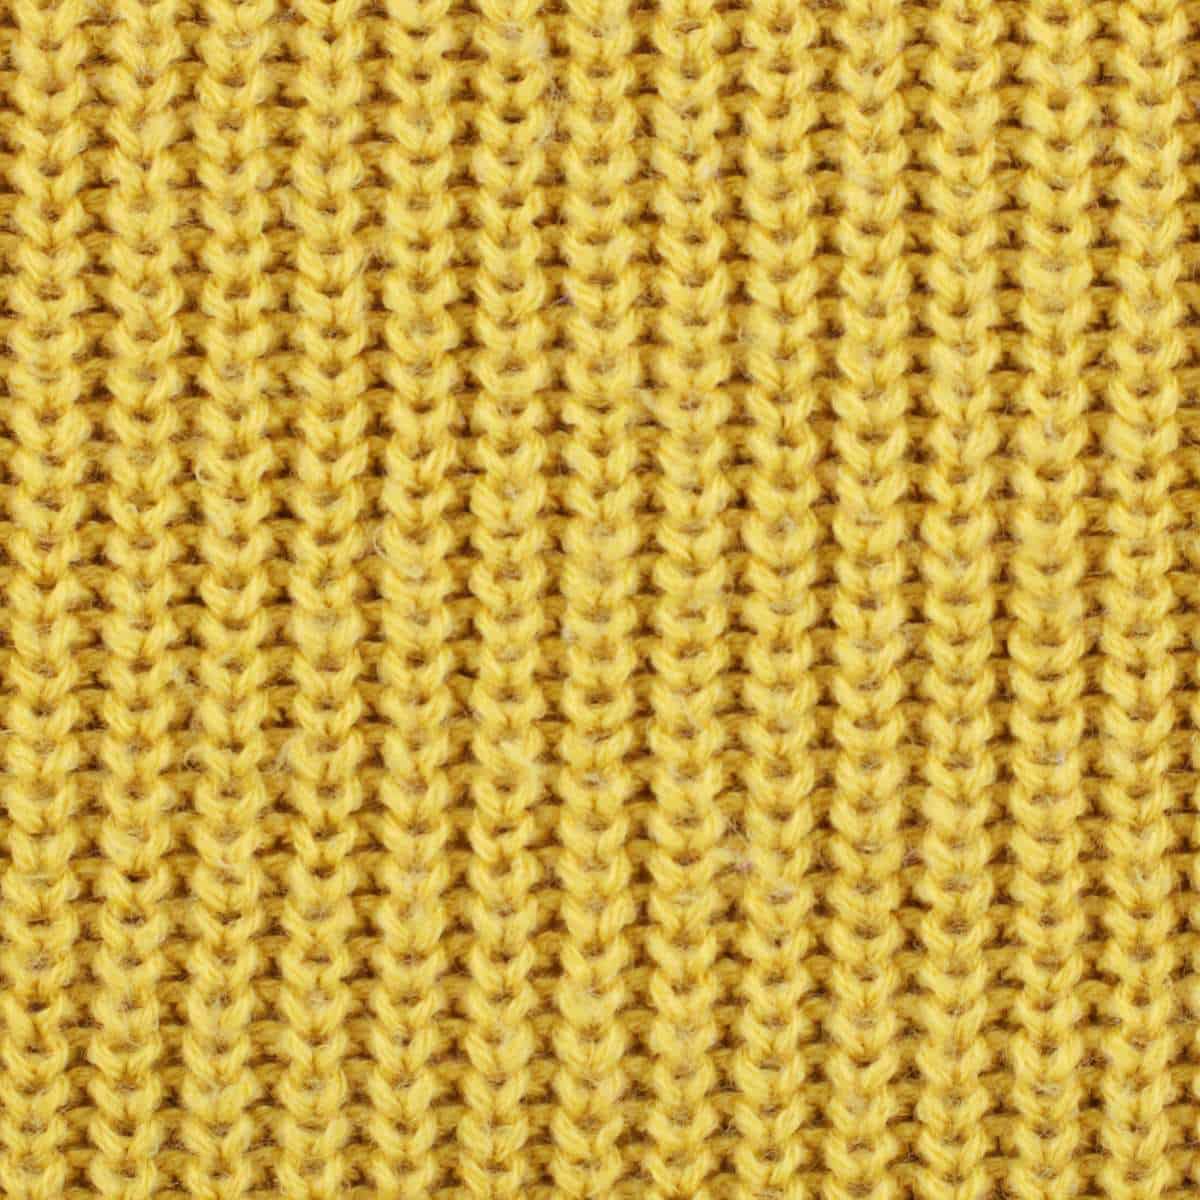 Fisherman's knit ribbing stitch in yellow yarn.